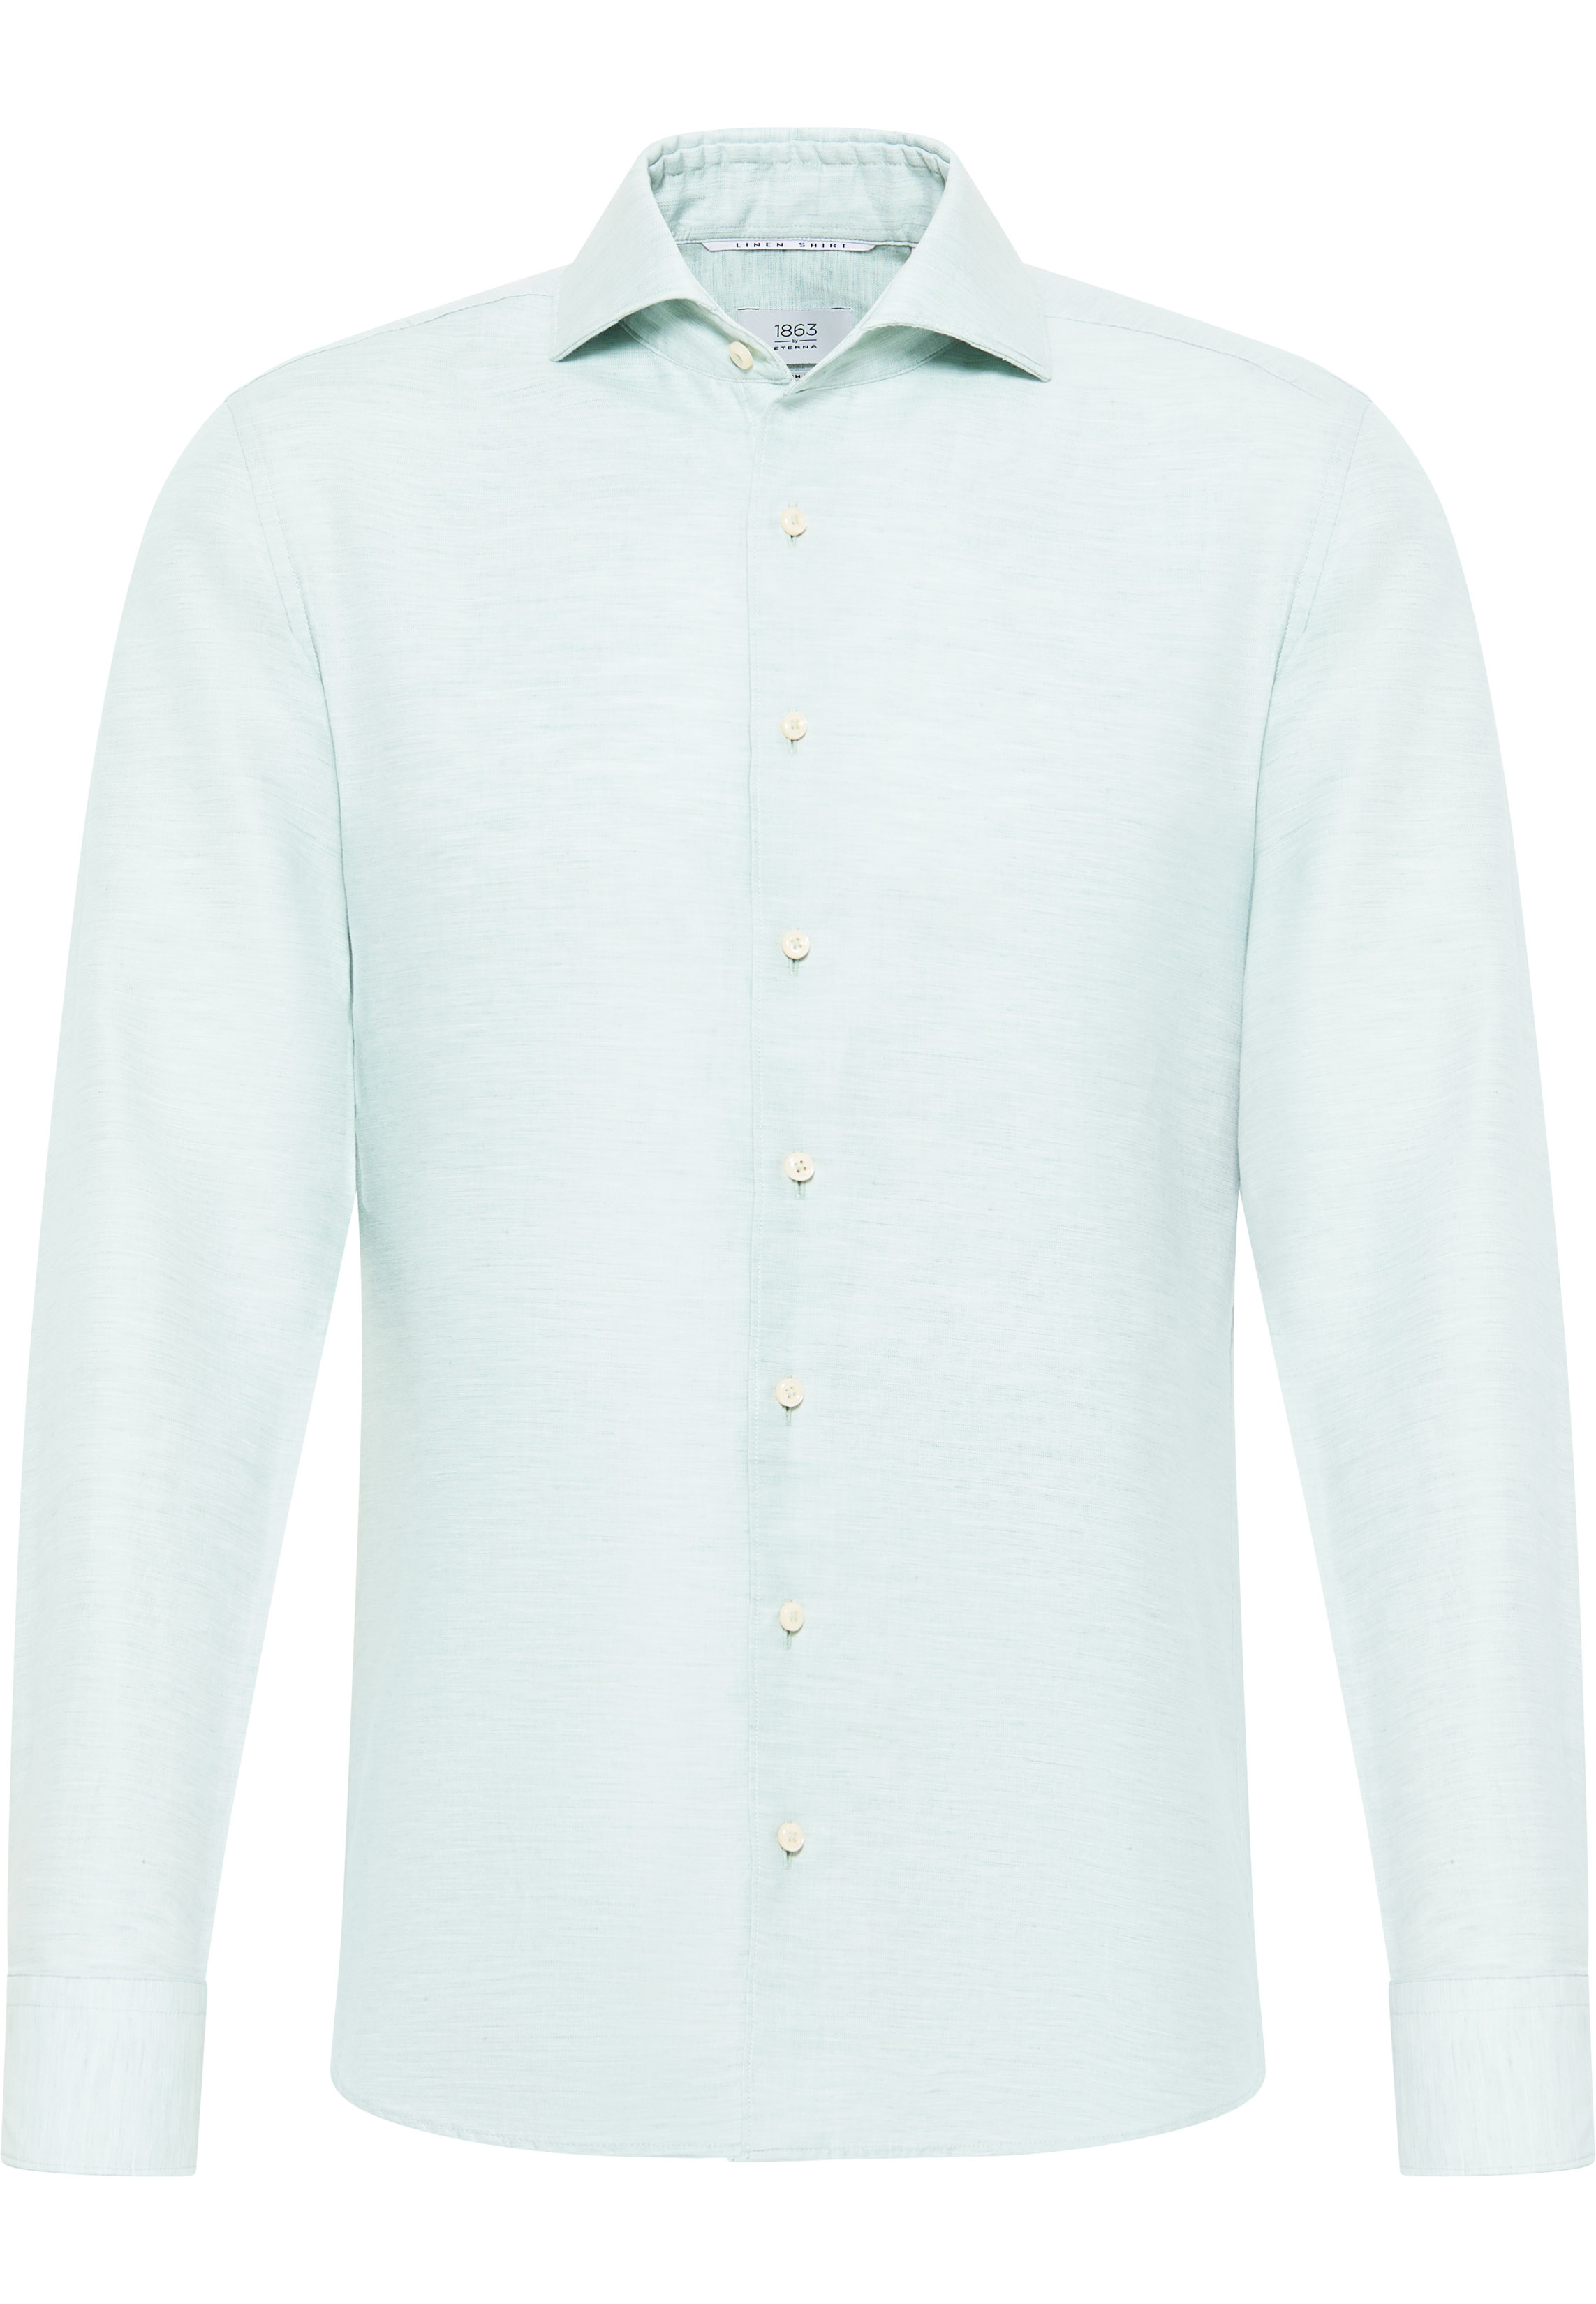 SLIM FIT Linen Shirt in turquoise vlakte